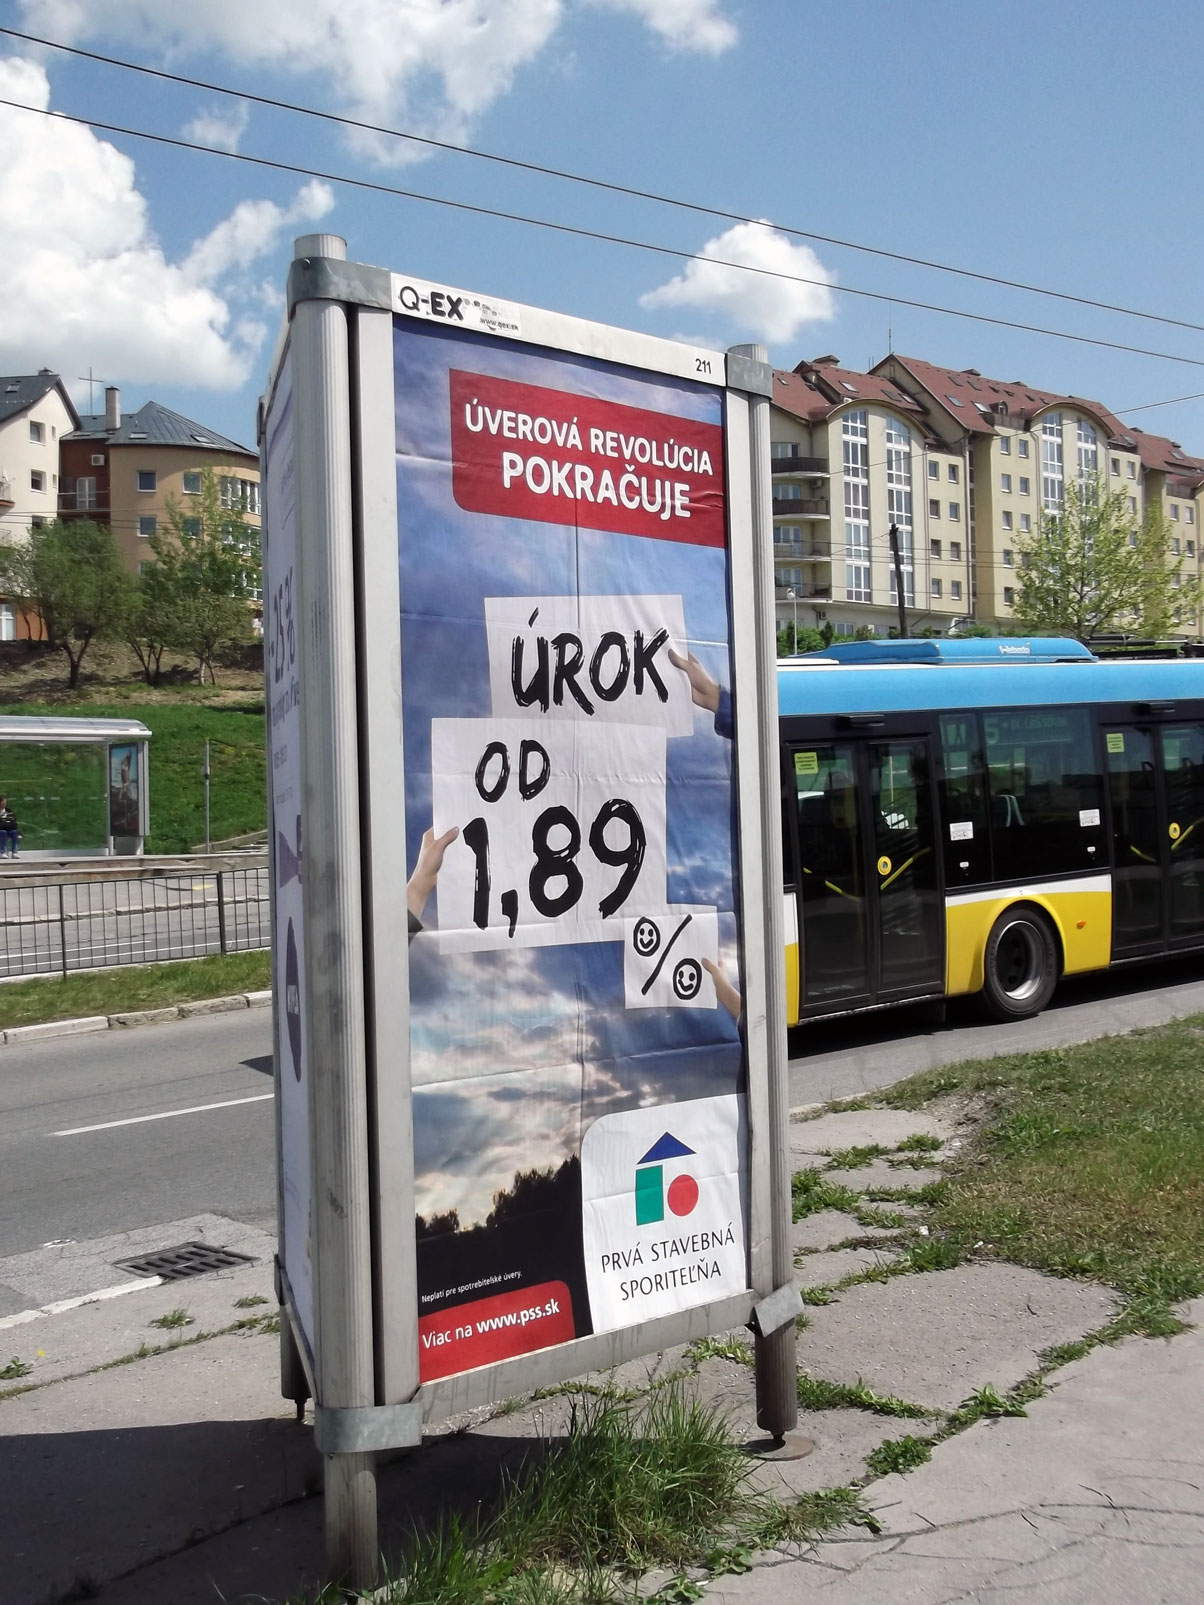 286017 Cityboard, Košice (Trieda gen. Svobodu)